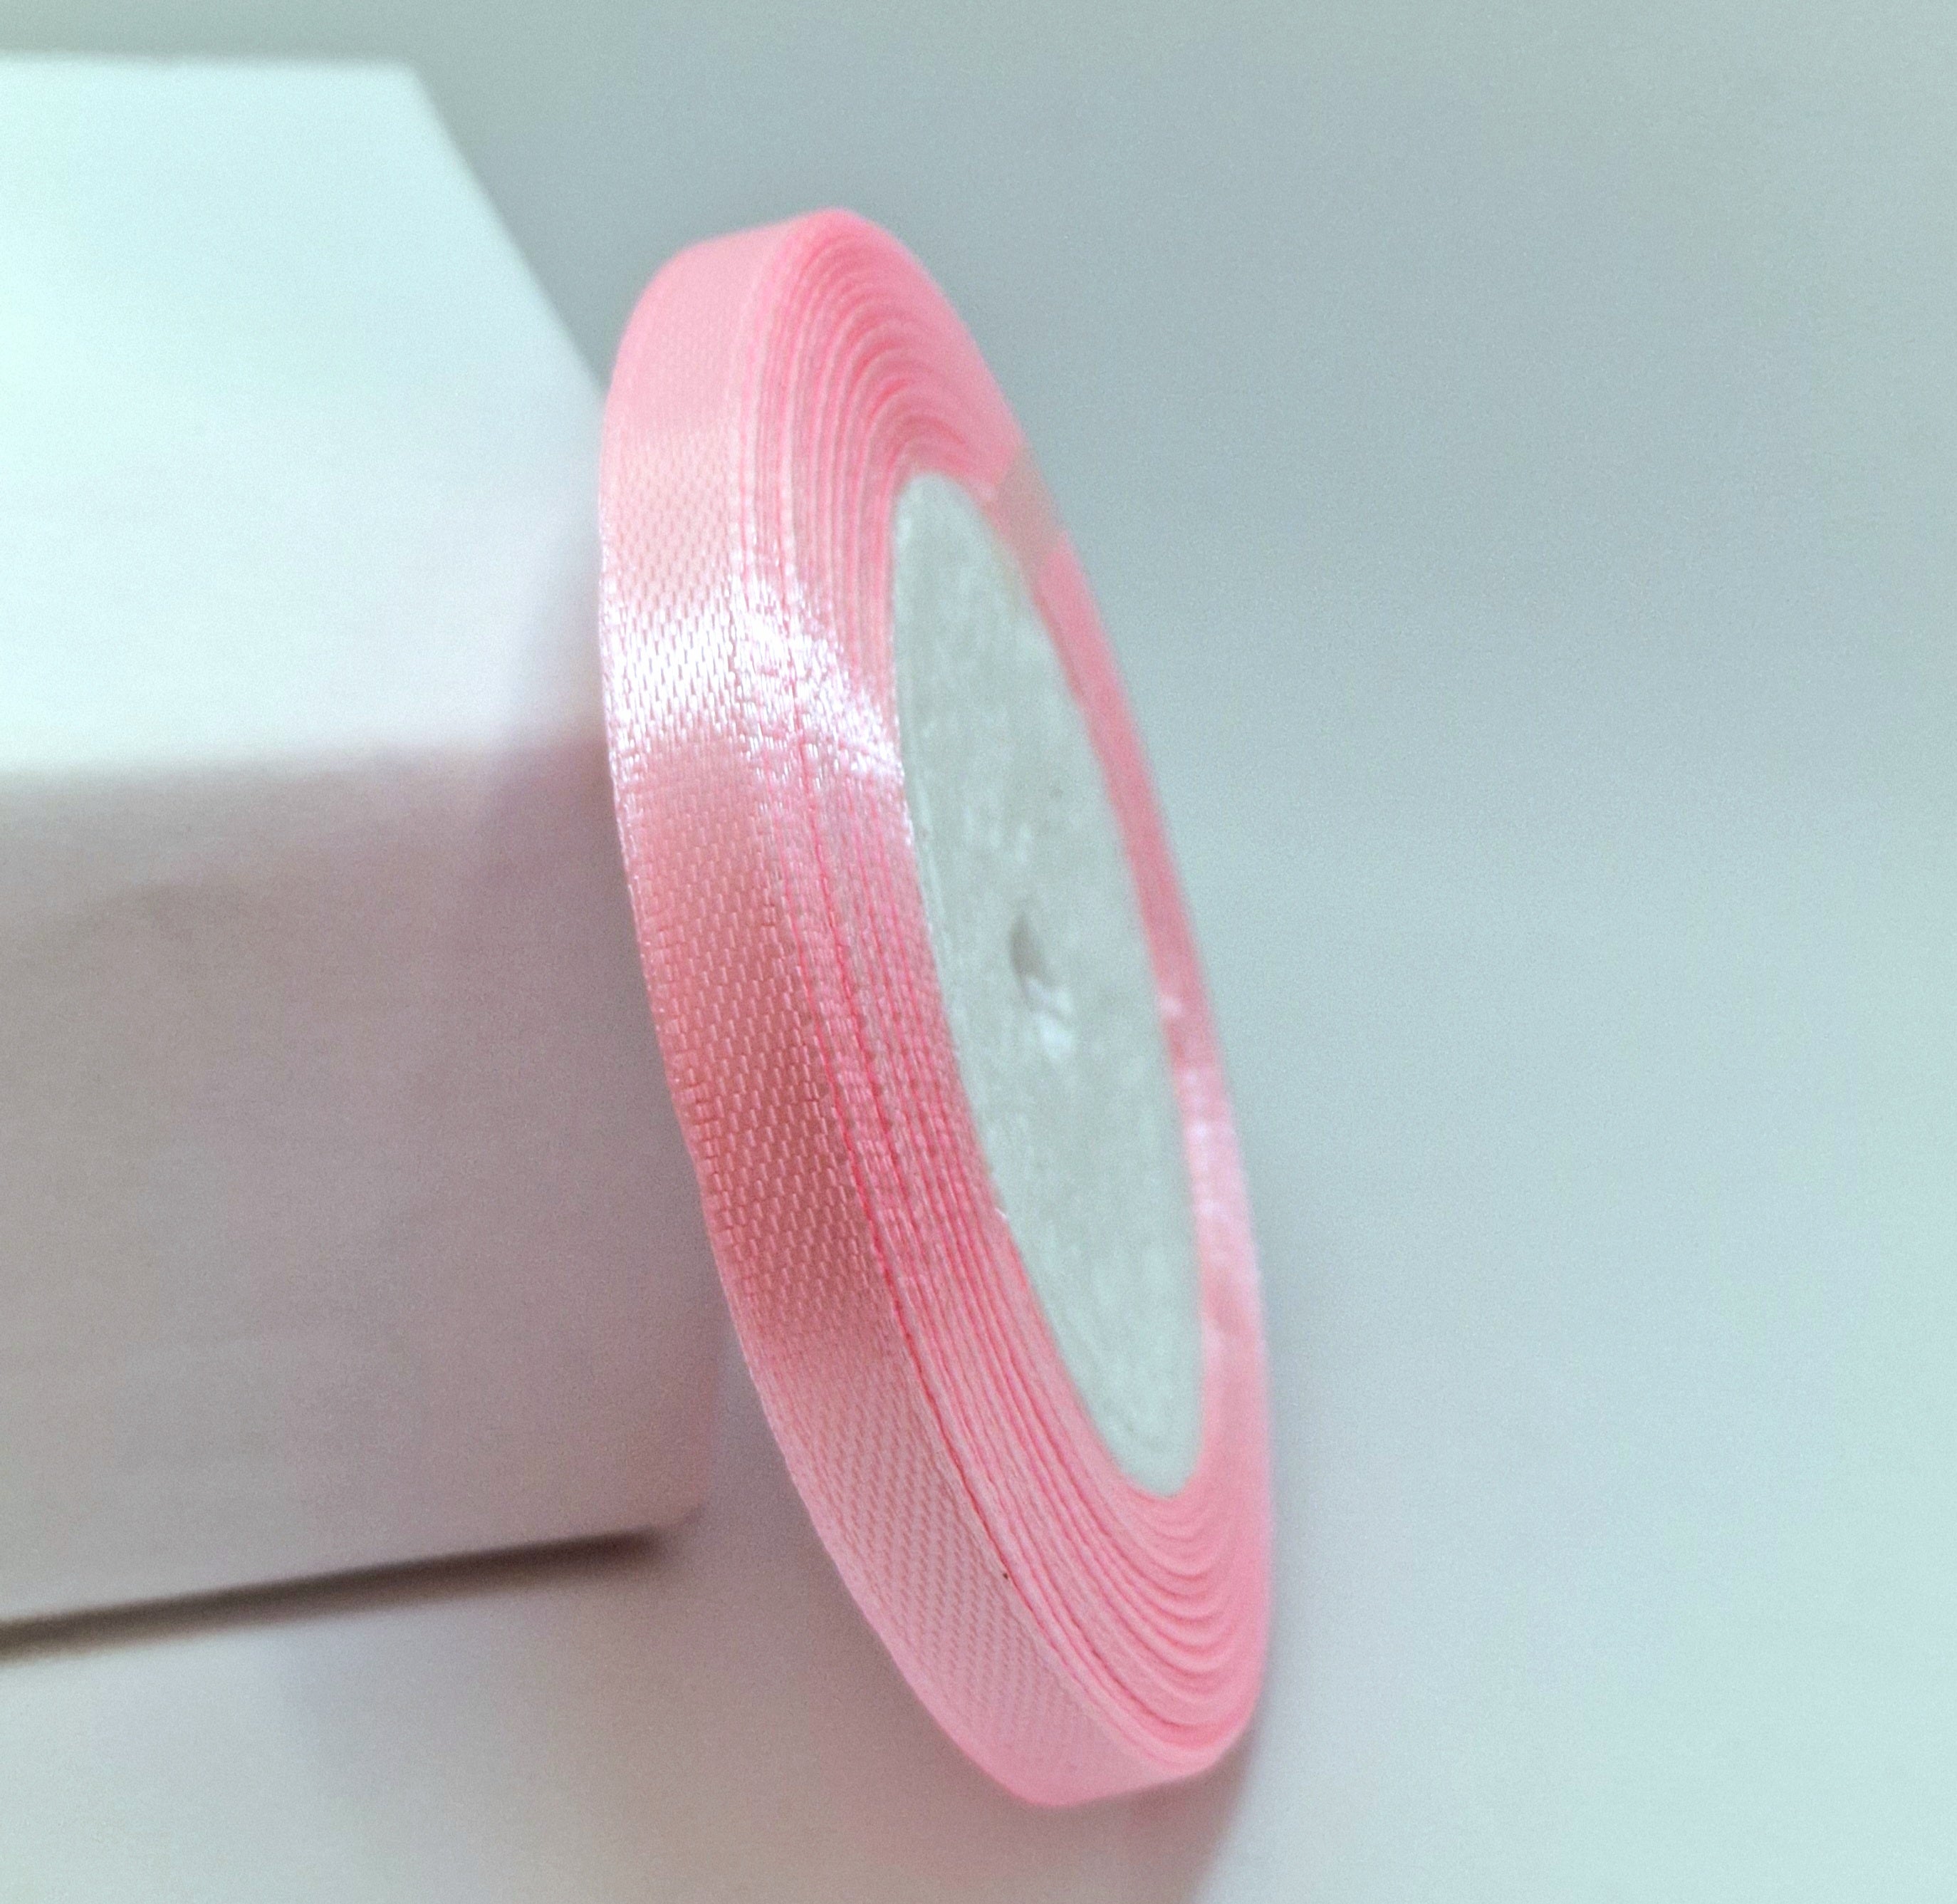 MajorCrafts 6mm 22metres Light Pink Satin Fabric Ribbon Roll R04